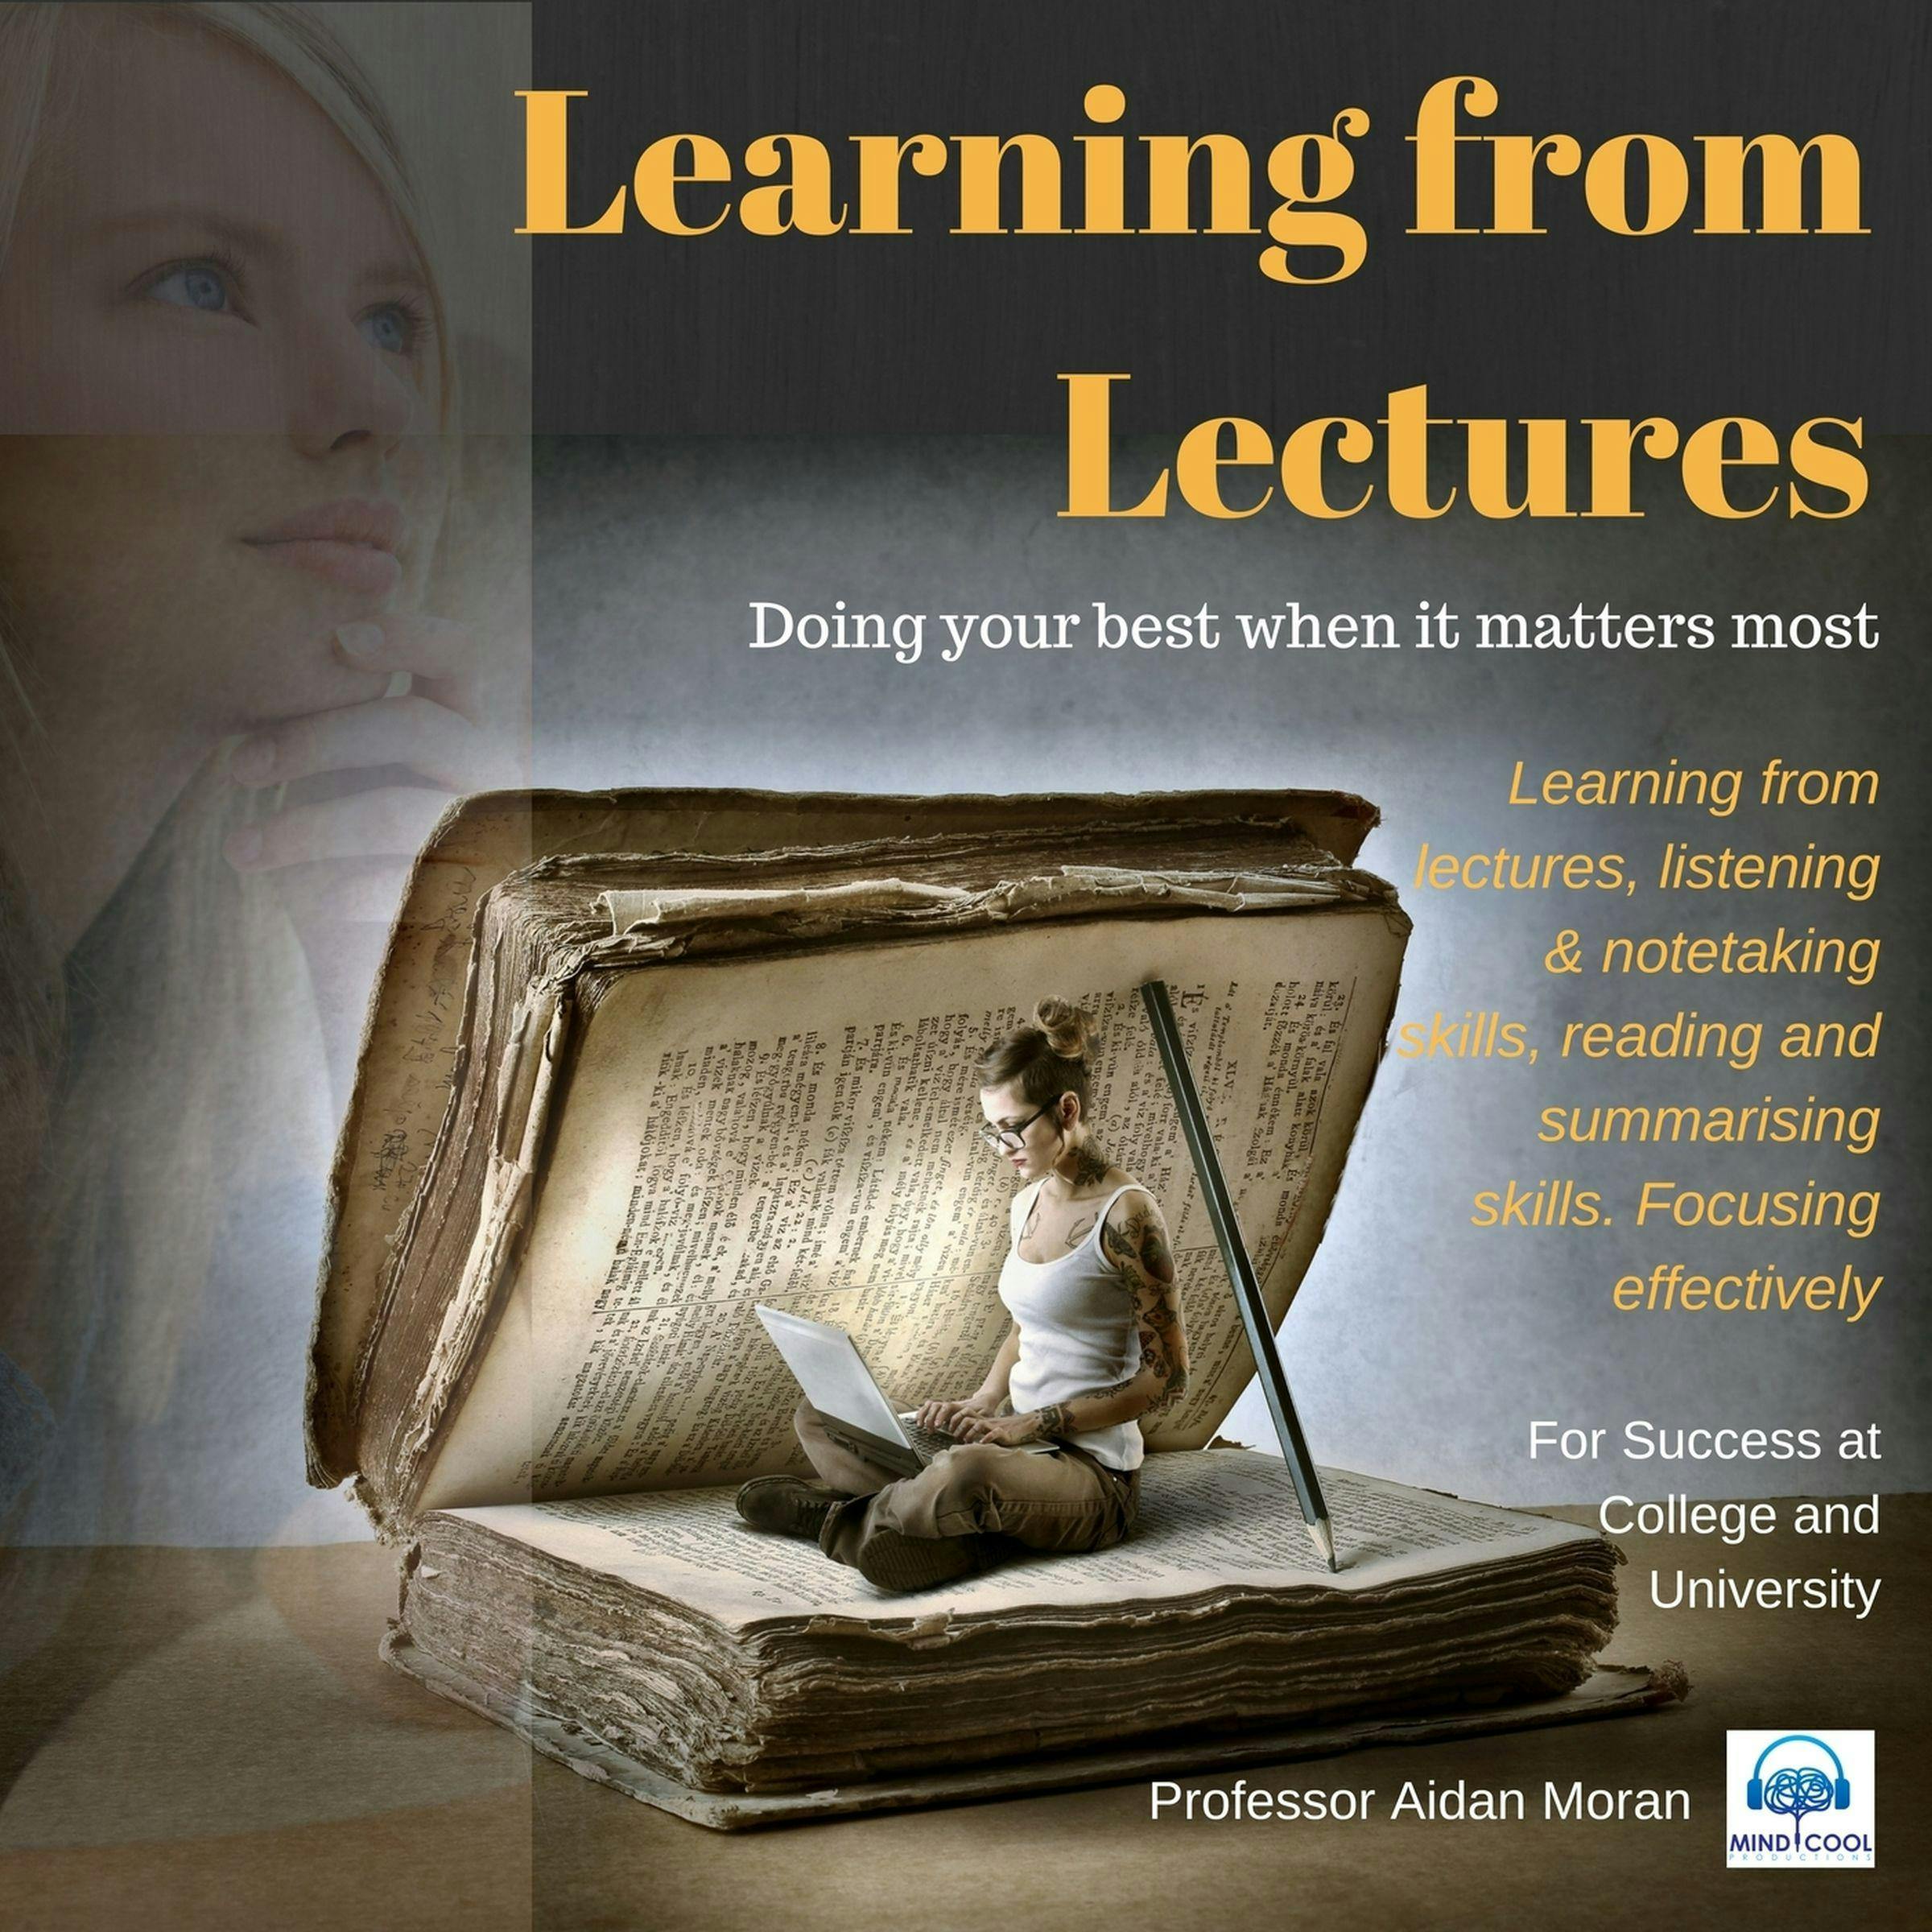 Learning from Lectures: Learning from lectures, listening & notetaking skills, reading and summarising skills. Focusing effectively. - Aidan Moran